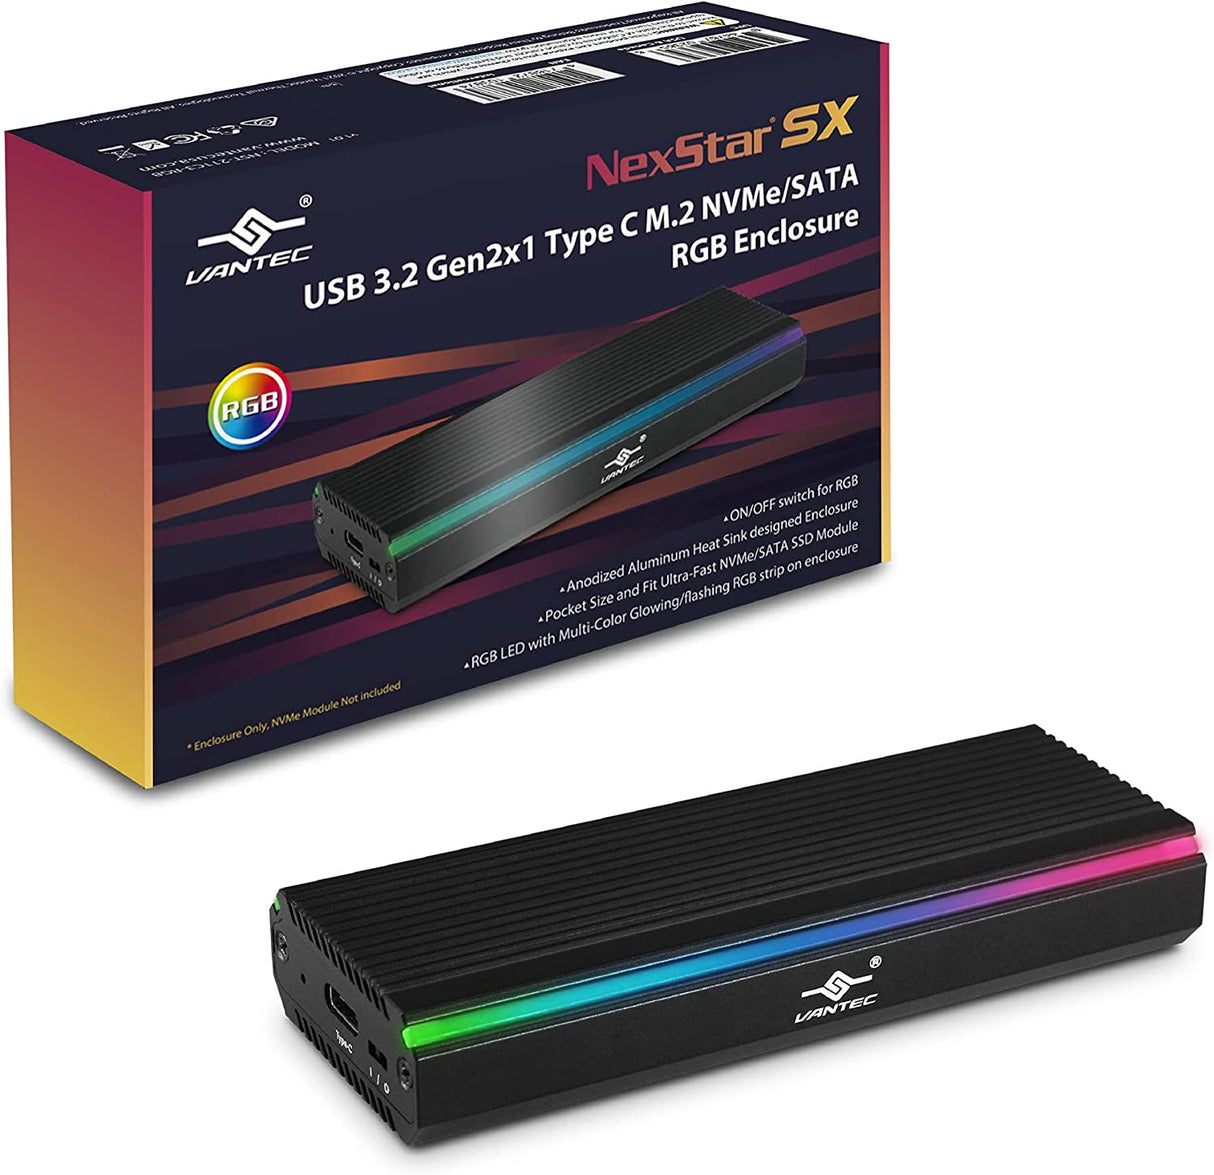 Vantec NexStar SX, USB 3.2 Gen2x1 Type C RGB Enclosure for M.2 NVMe or M.2 SATA, Multi-Color RGB, Pocket Size, Anodized Aluminum, toolless Mount, UASP, No Drivers Needed (NST-211C3-RGB)